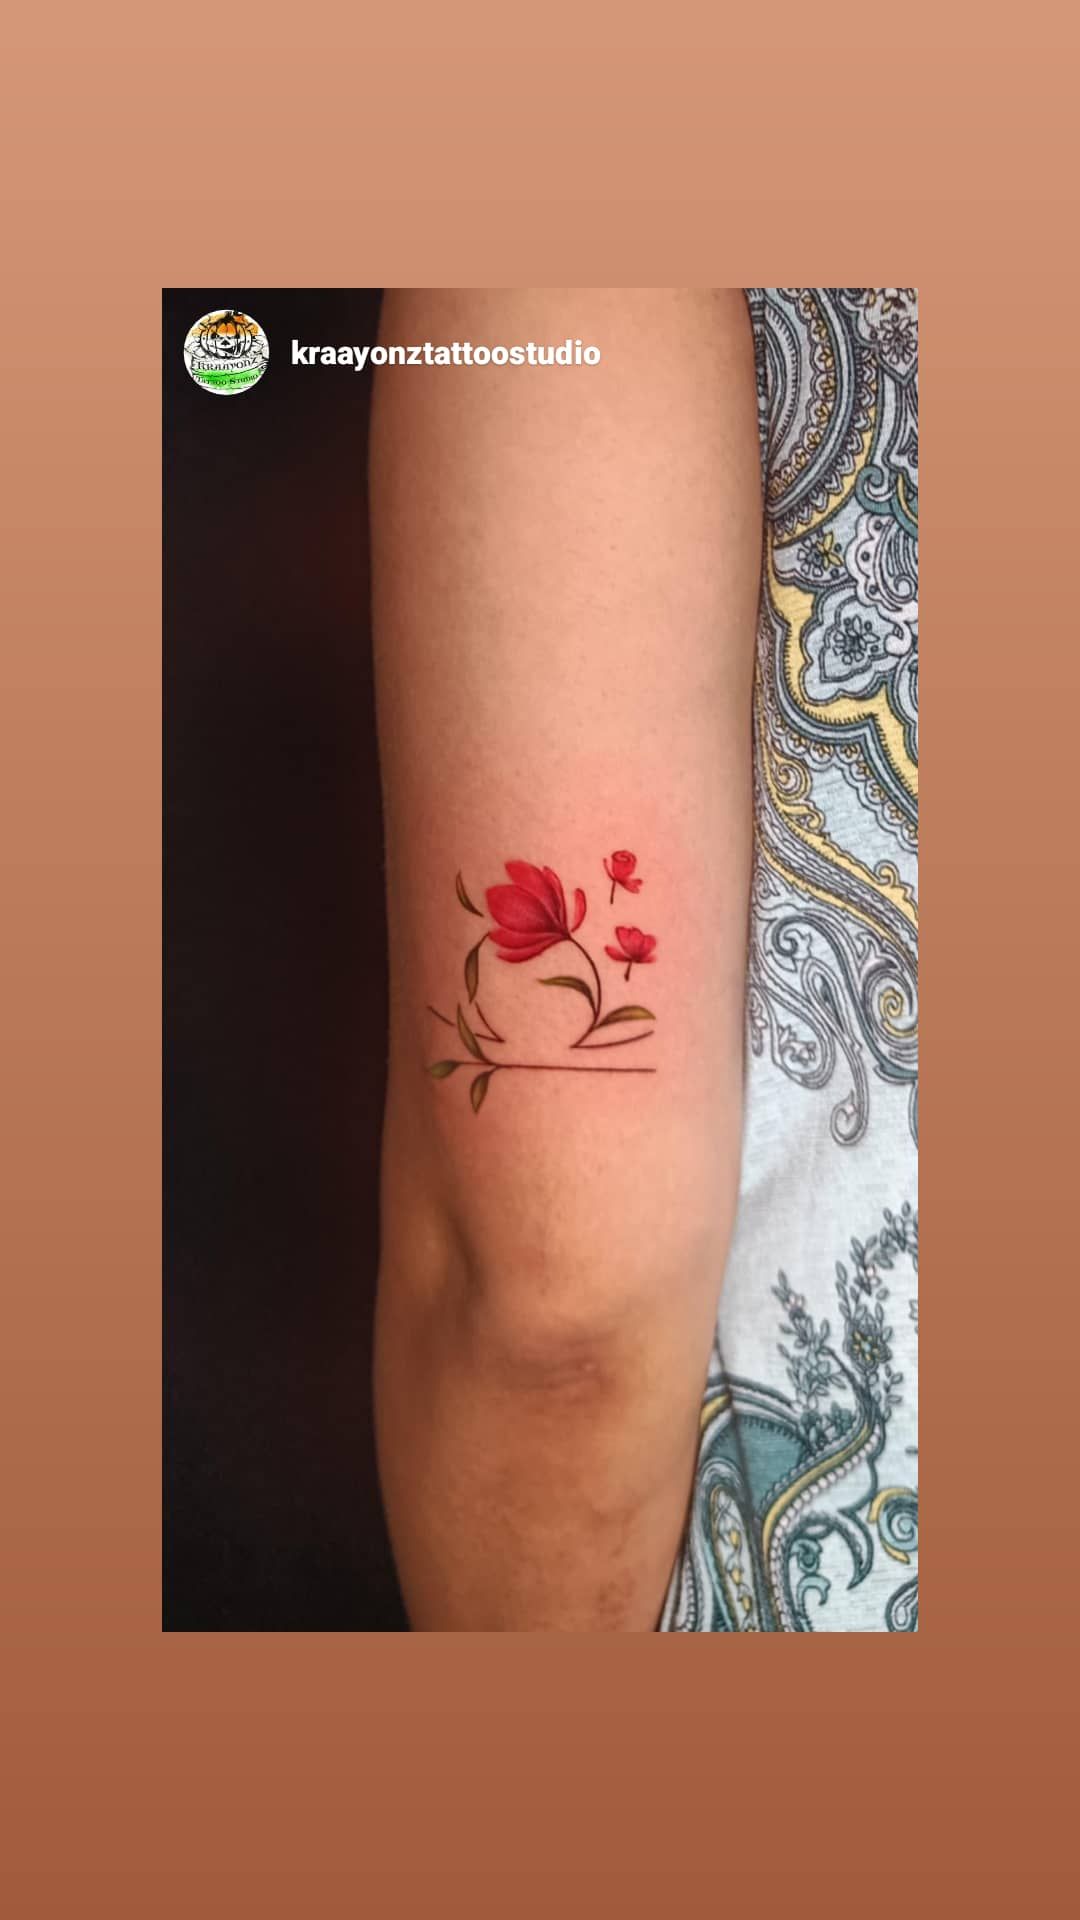 Deep Tattoo Artist from Bangalore India & his Tattoo Work